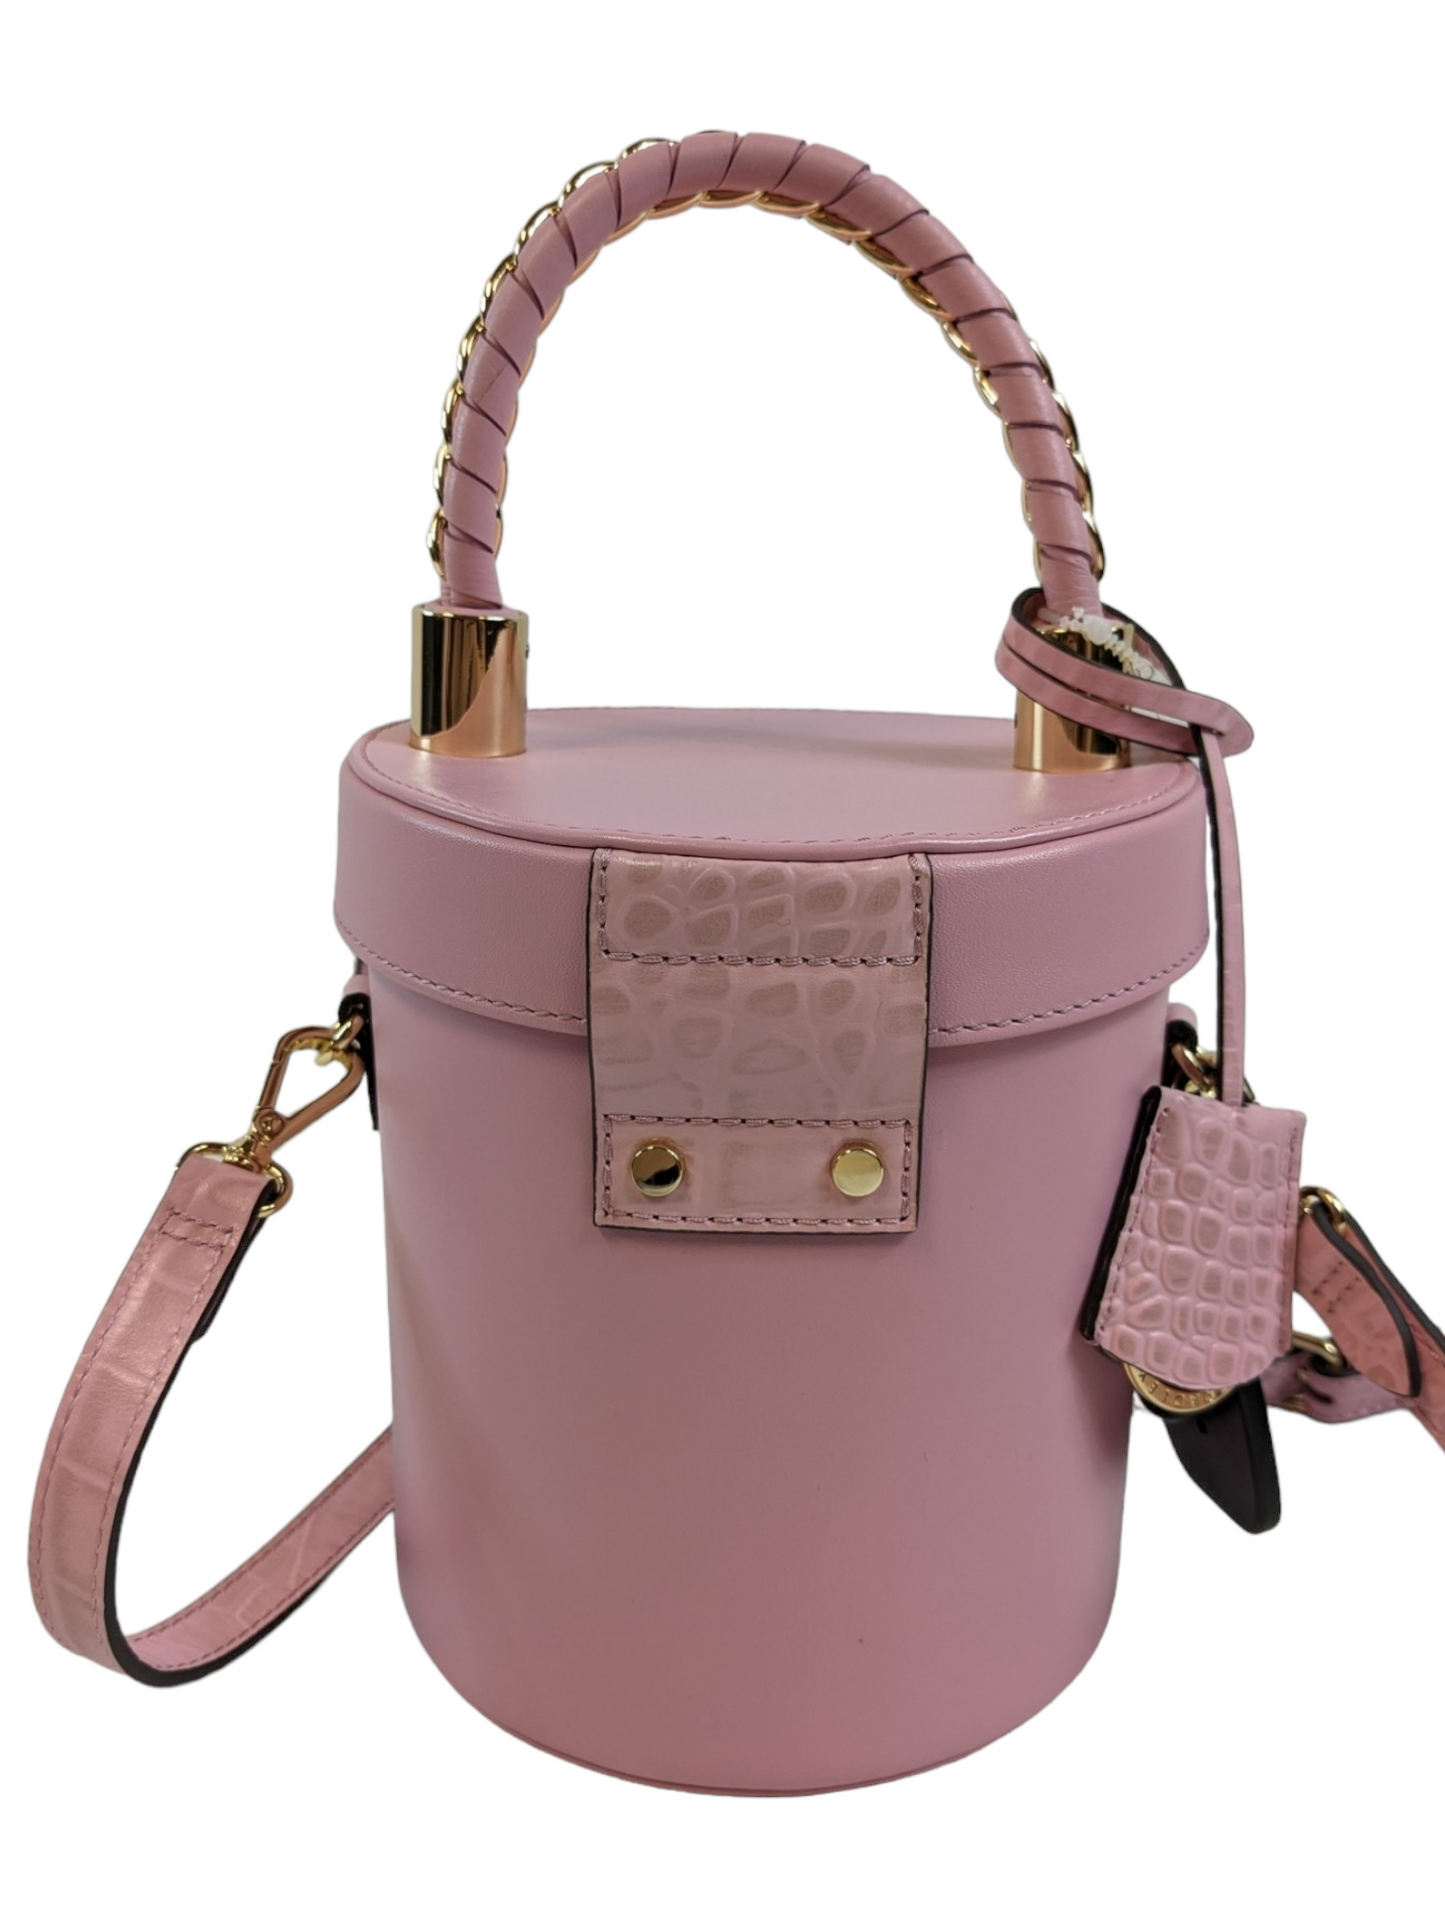 Handbag Designer By Radley London  Size: Small